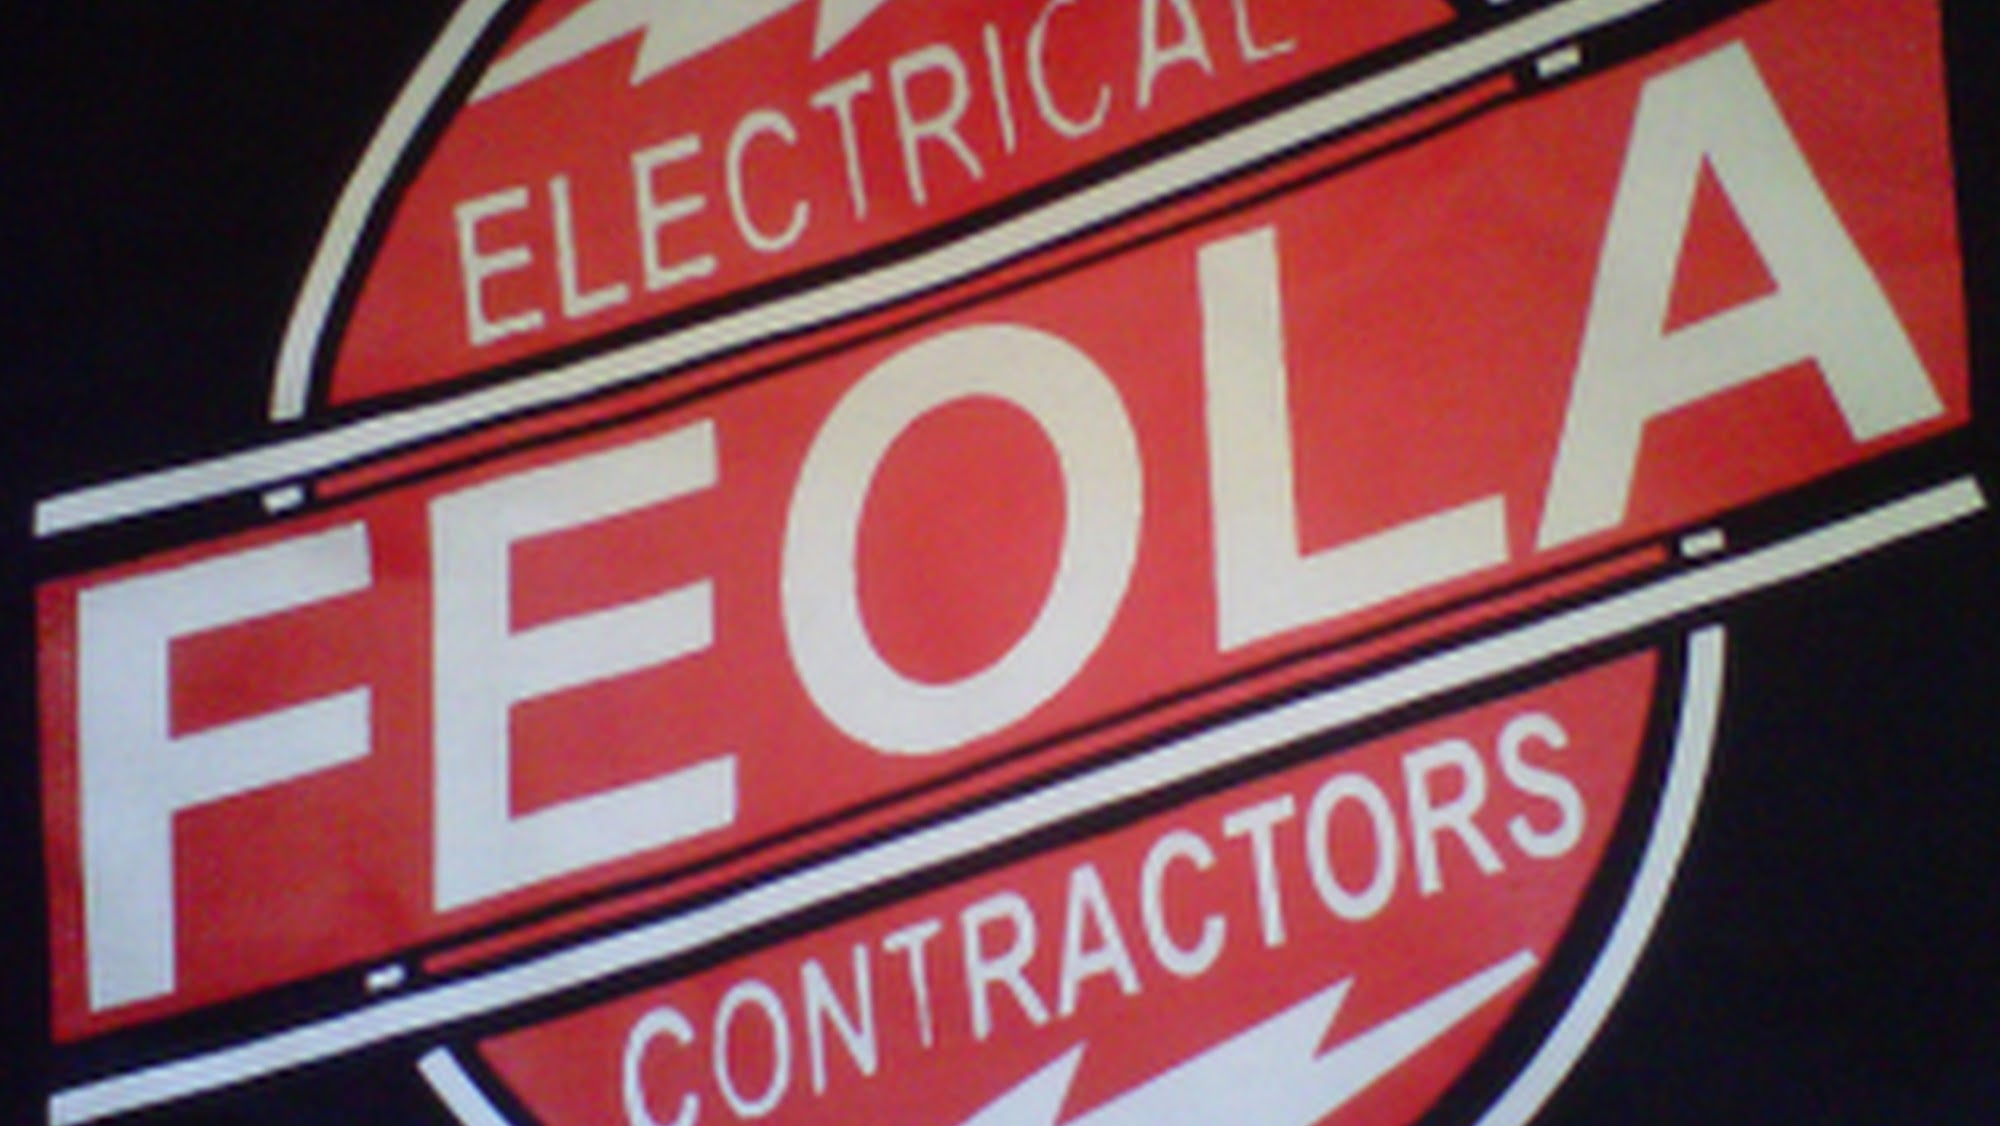 Feola Electric Inc